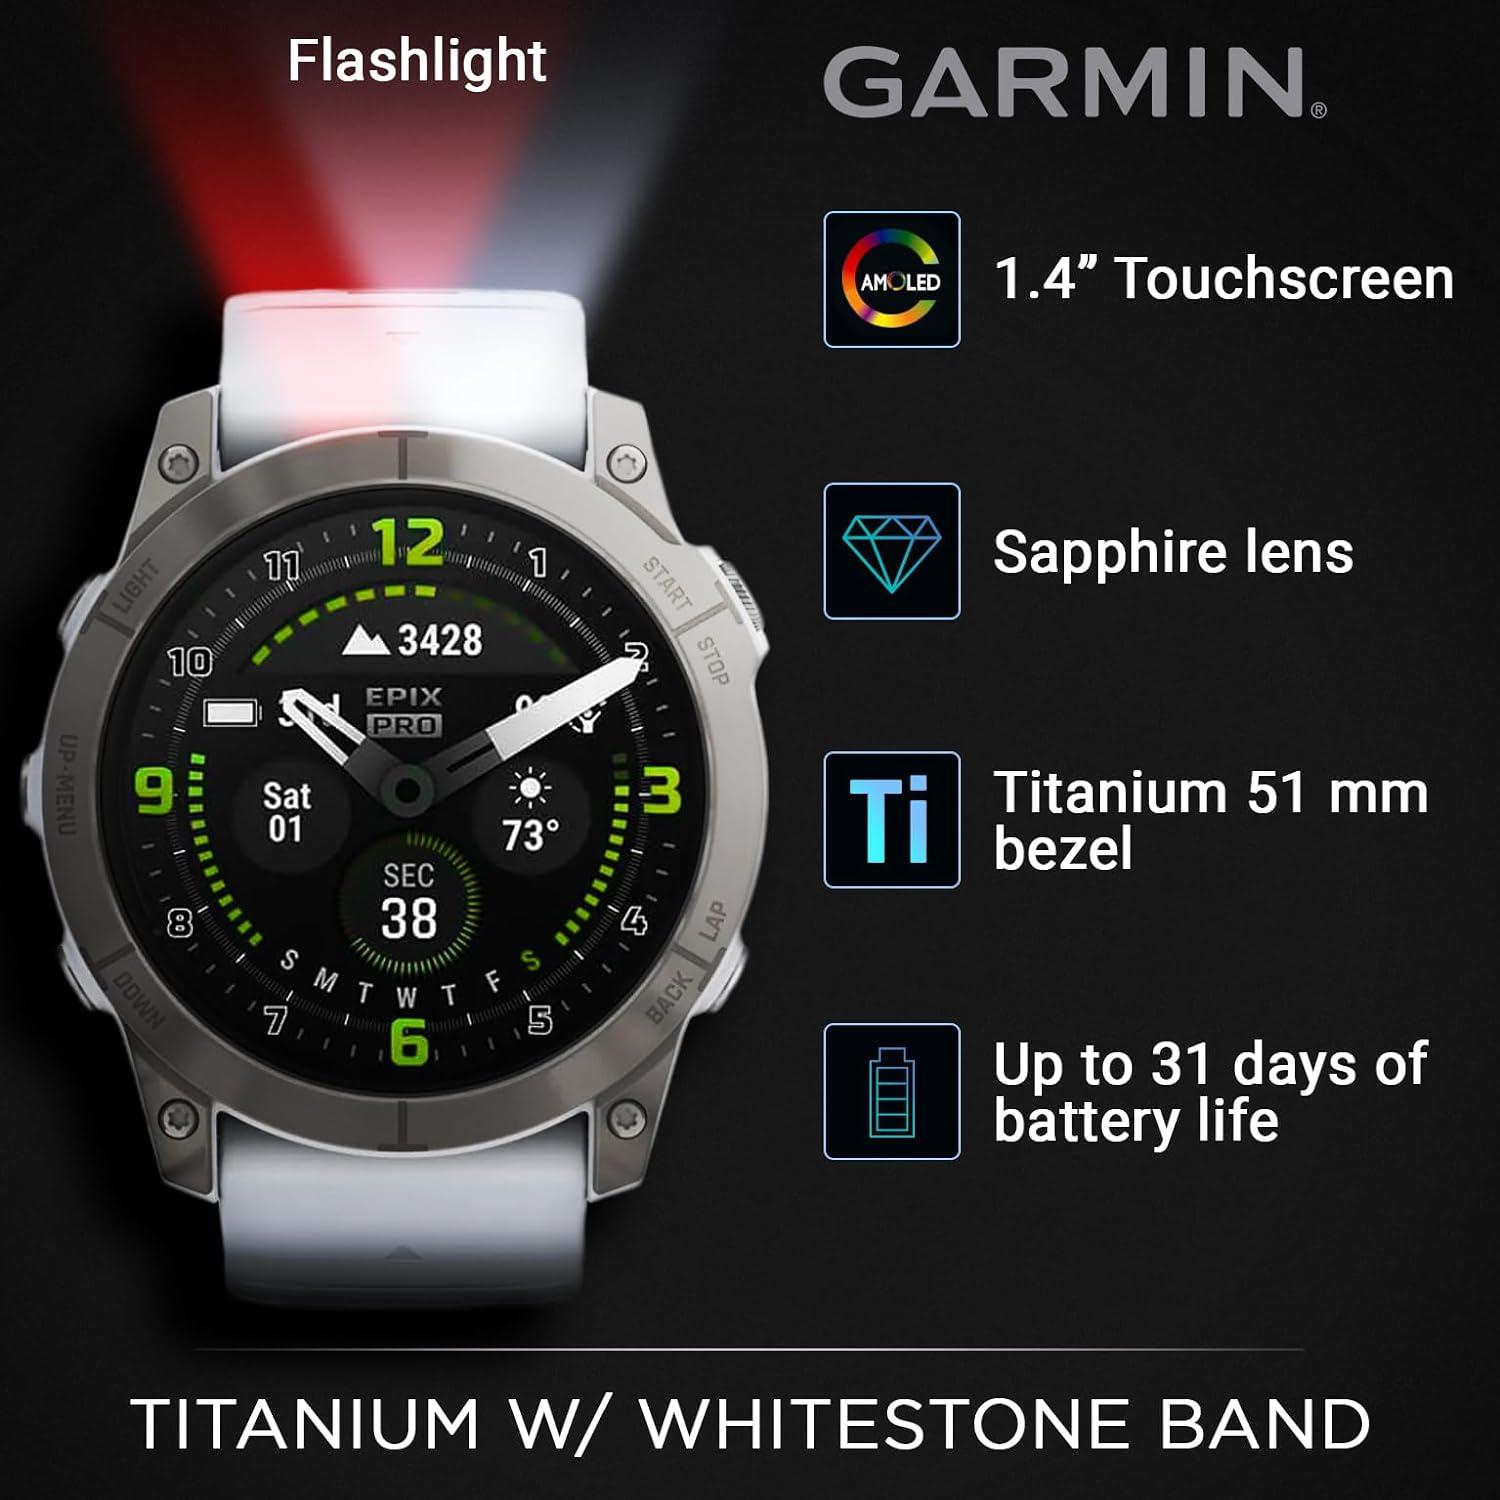 Garmin epix Gen 2, Premium active smartwatch, touchscreen AMOLED display,  Adventure Watch with Advanced Features, Slate Steel : Electronics 